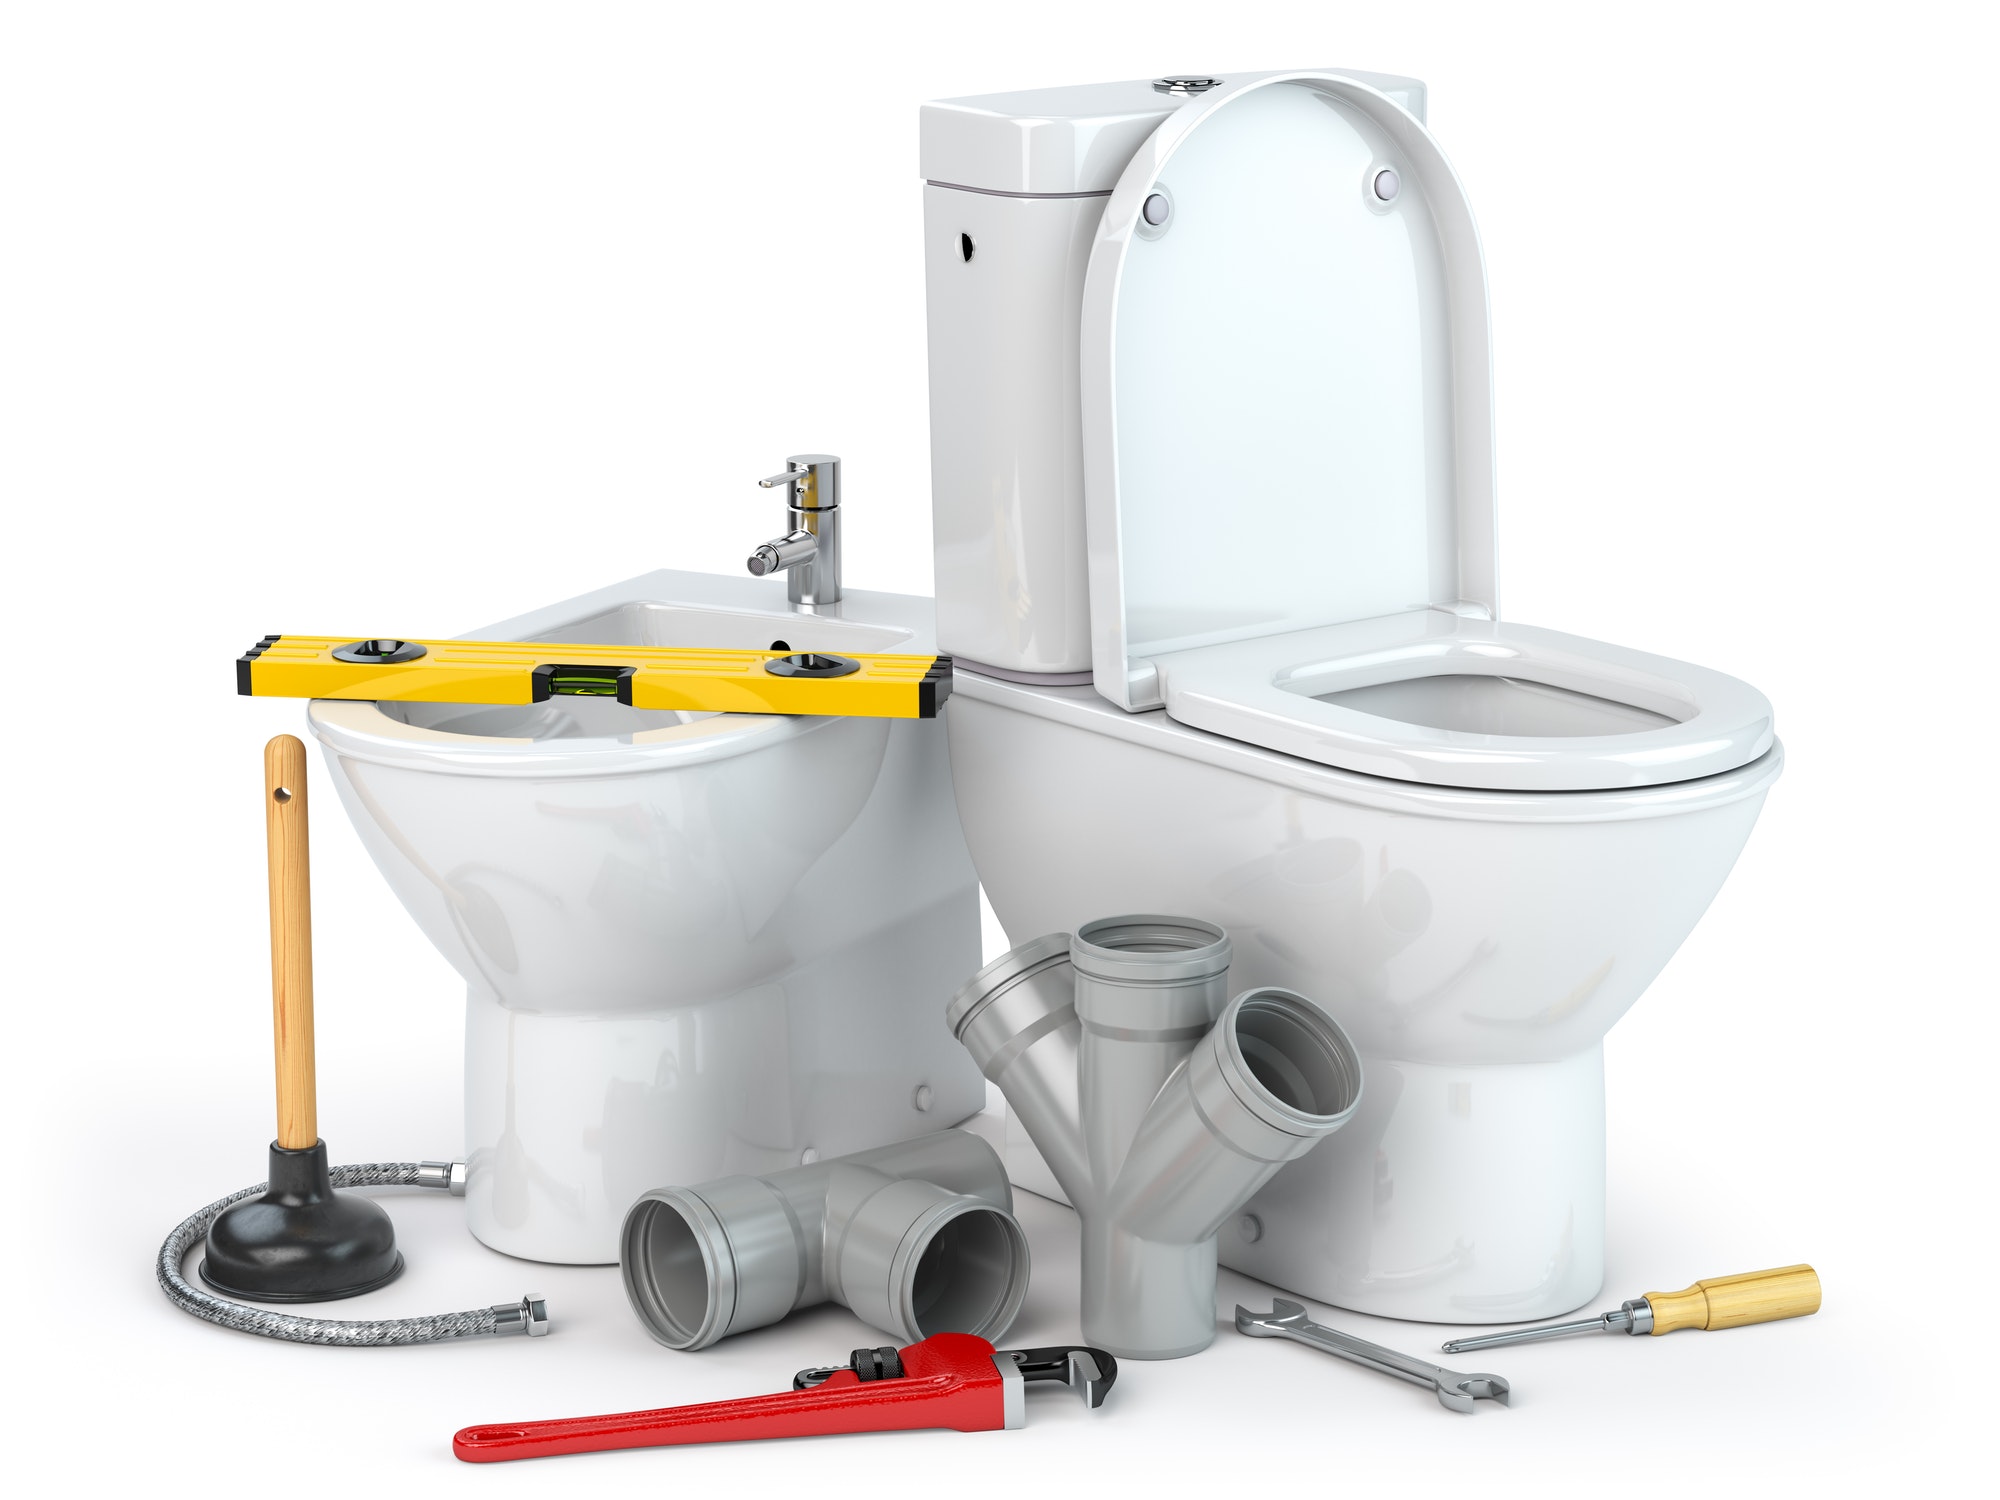 Plumbing repair service. Bowl and bidet with plumbing tools for